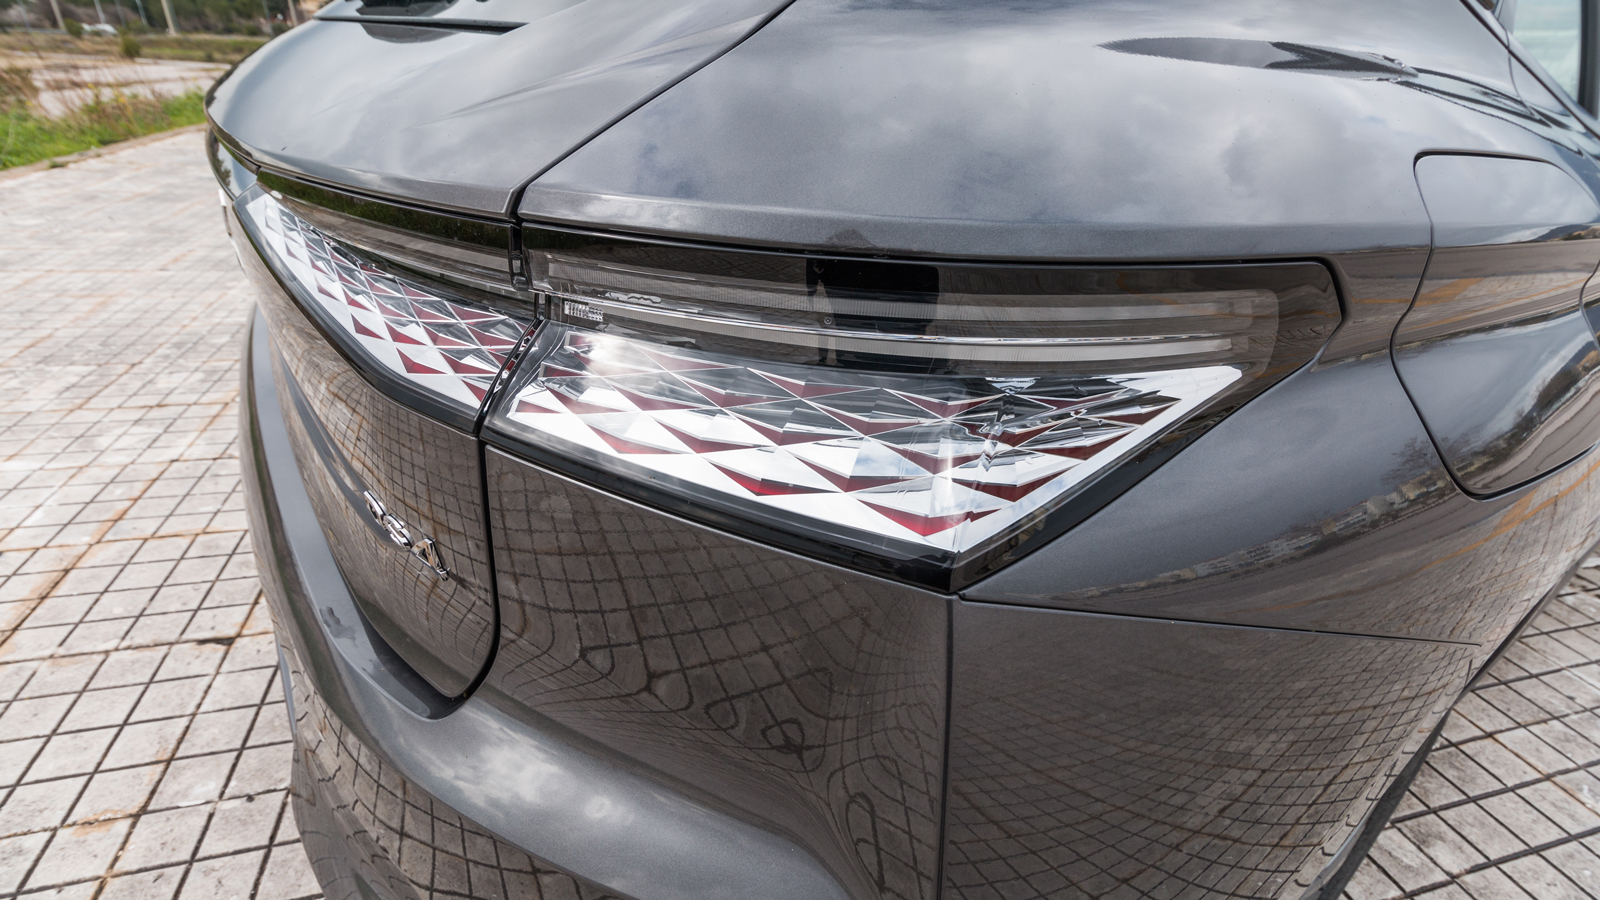 DS 4 VS Opel Astra: Premium μικρομεσαία Plug-in υβριδικά